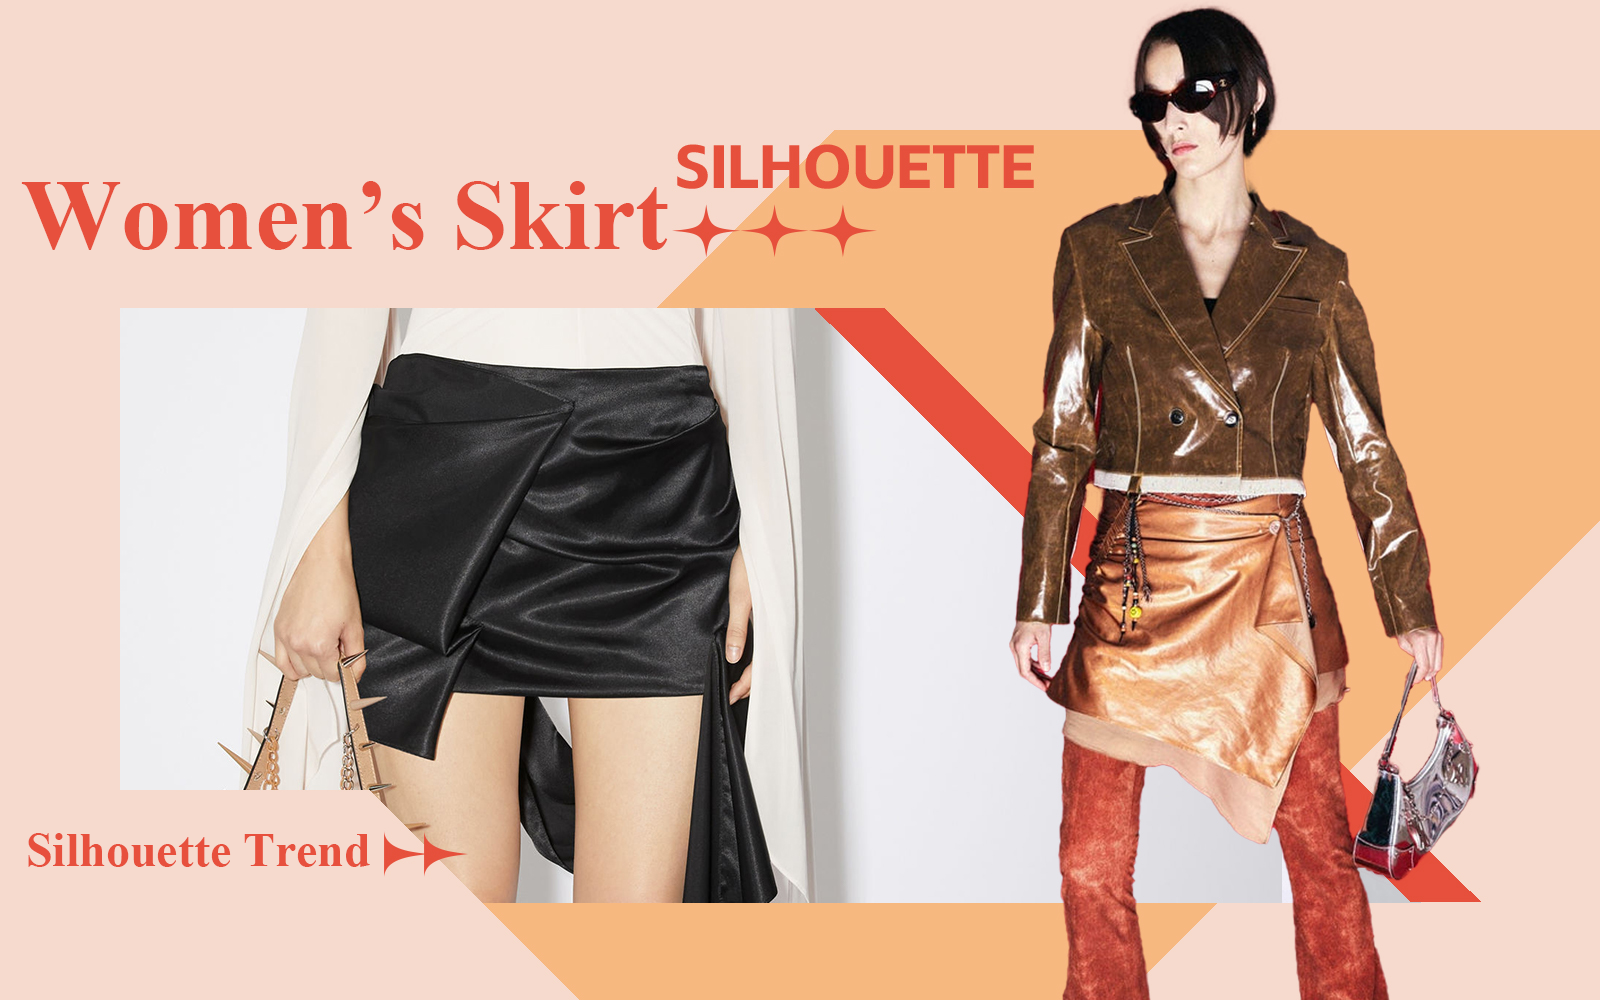 The Silhouette Trend for Women's Skirt